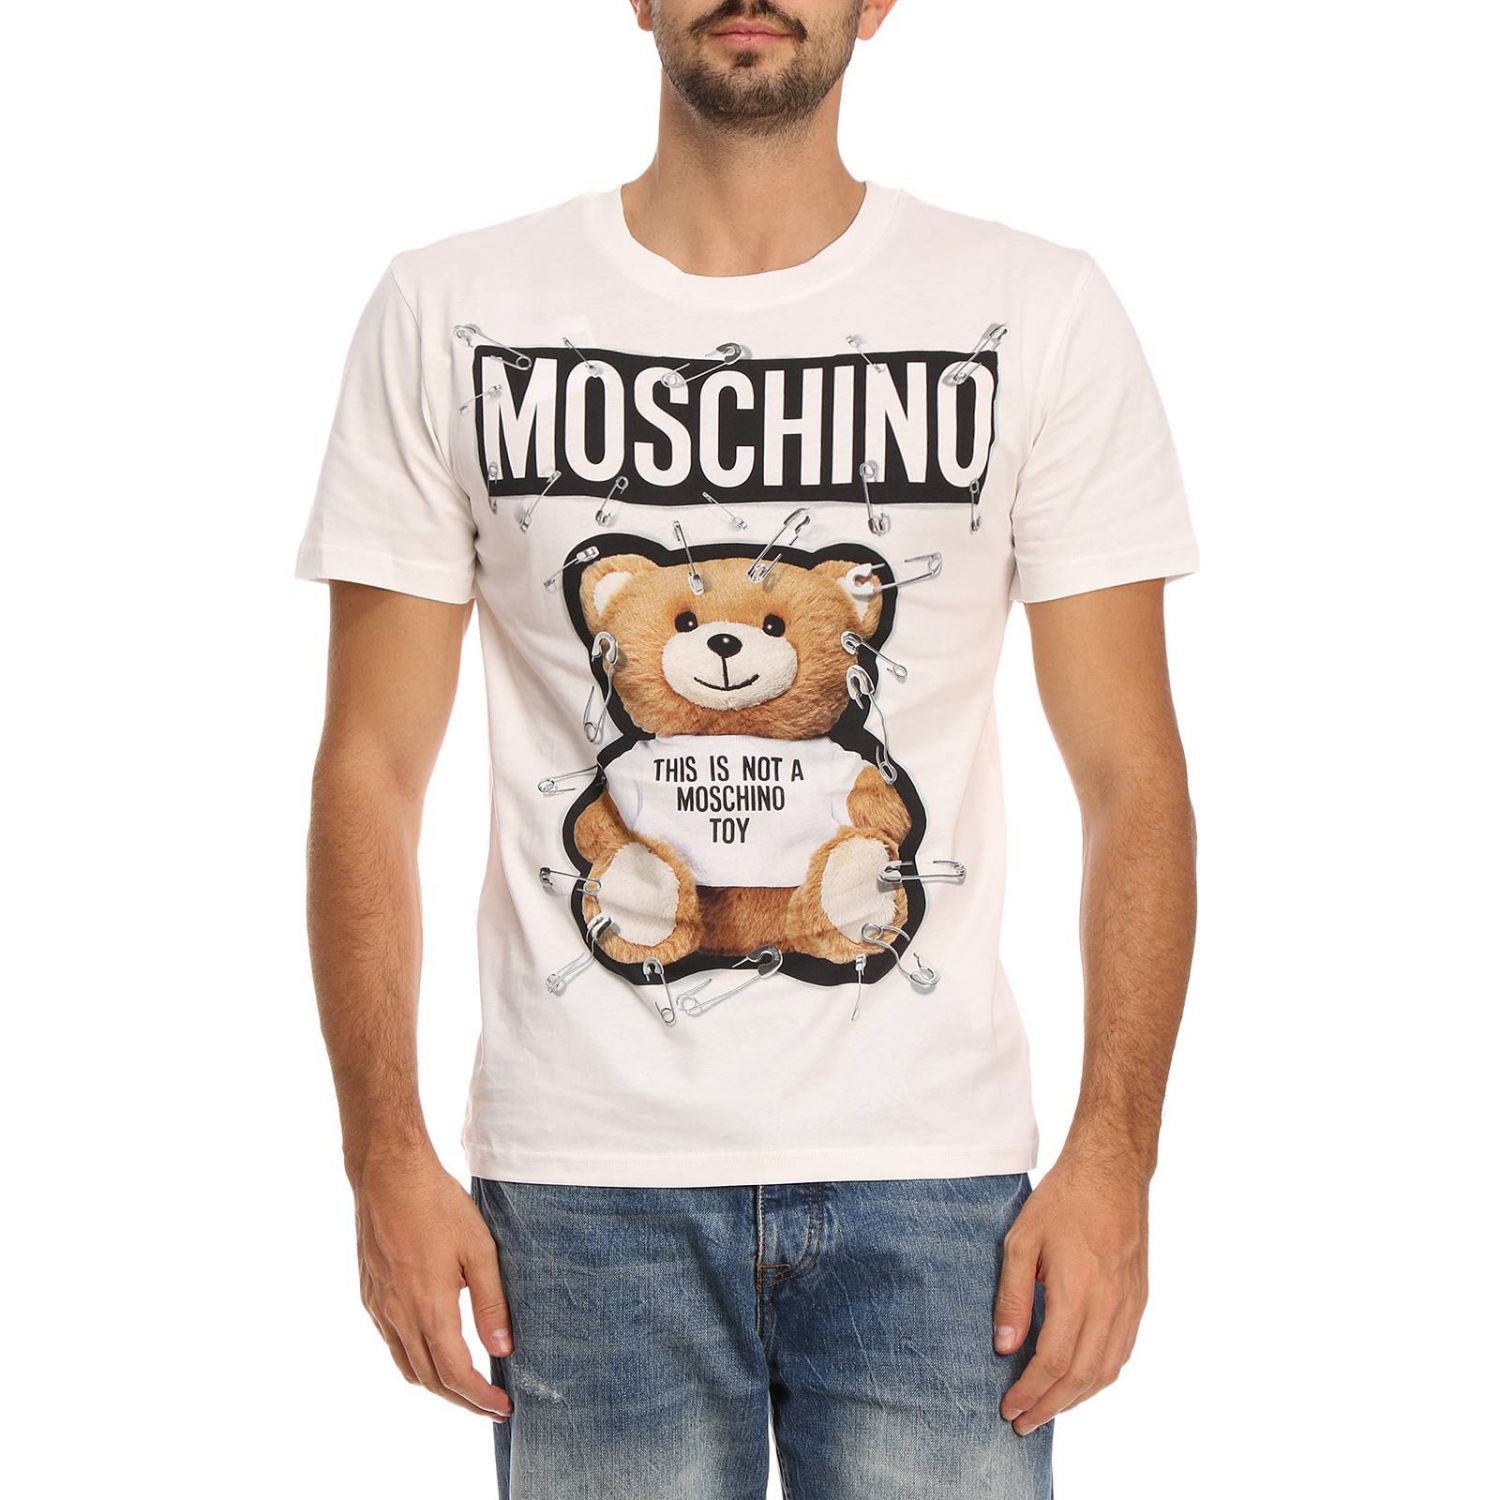 Moschino Couture Outlet: Camiseta hombre | Camiseta Moschino Couture